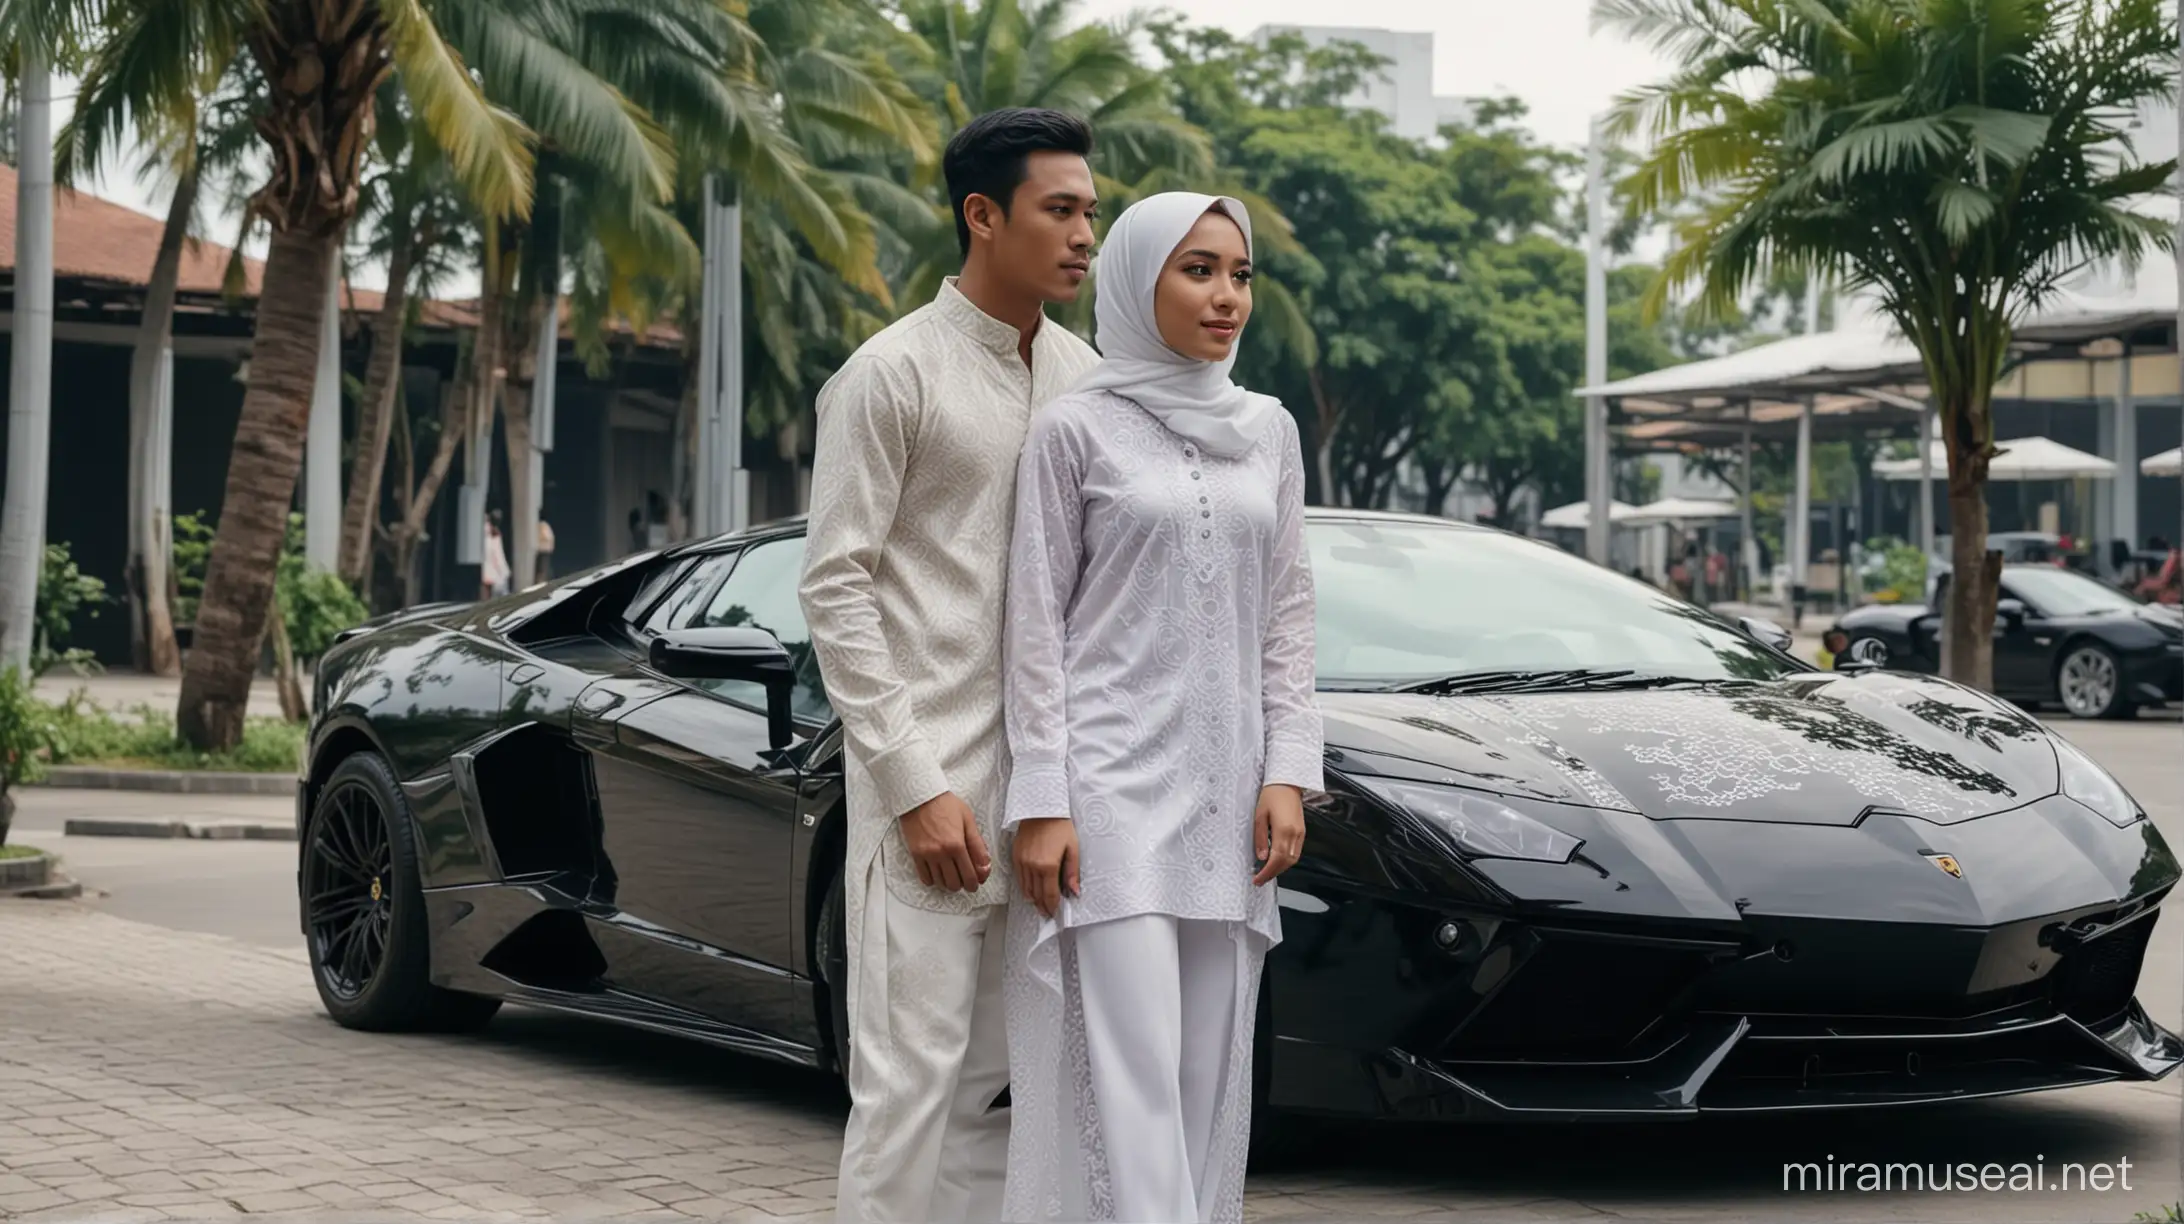 Pria indonesia berkemeja batik putih bersama Gadis menggunakan hijab dan kebaya longgar berdiri di dekat lamborgini hitam ditengah pemandangan perkotaan yang sepi, foto UHD, 16K